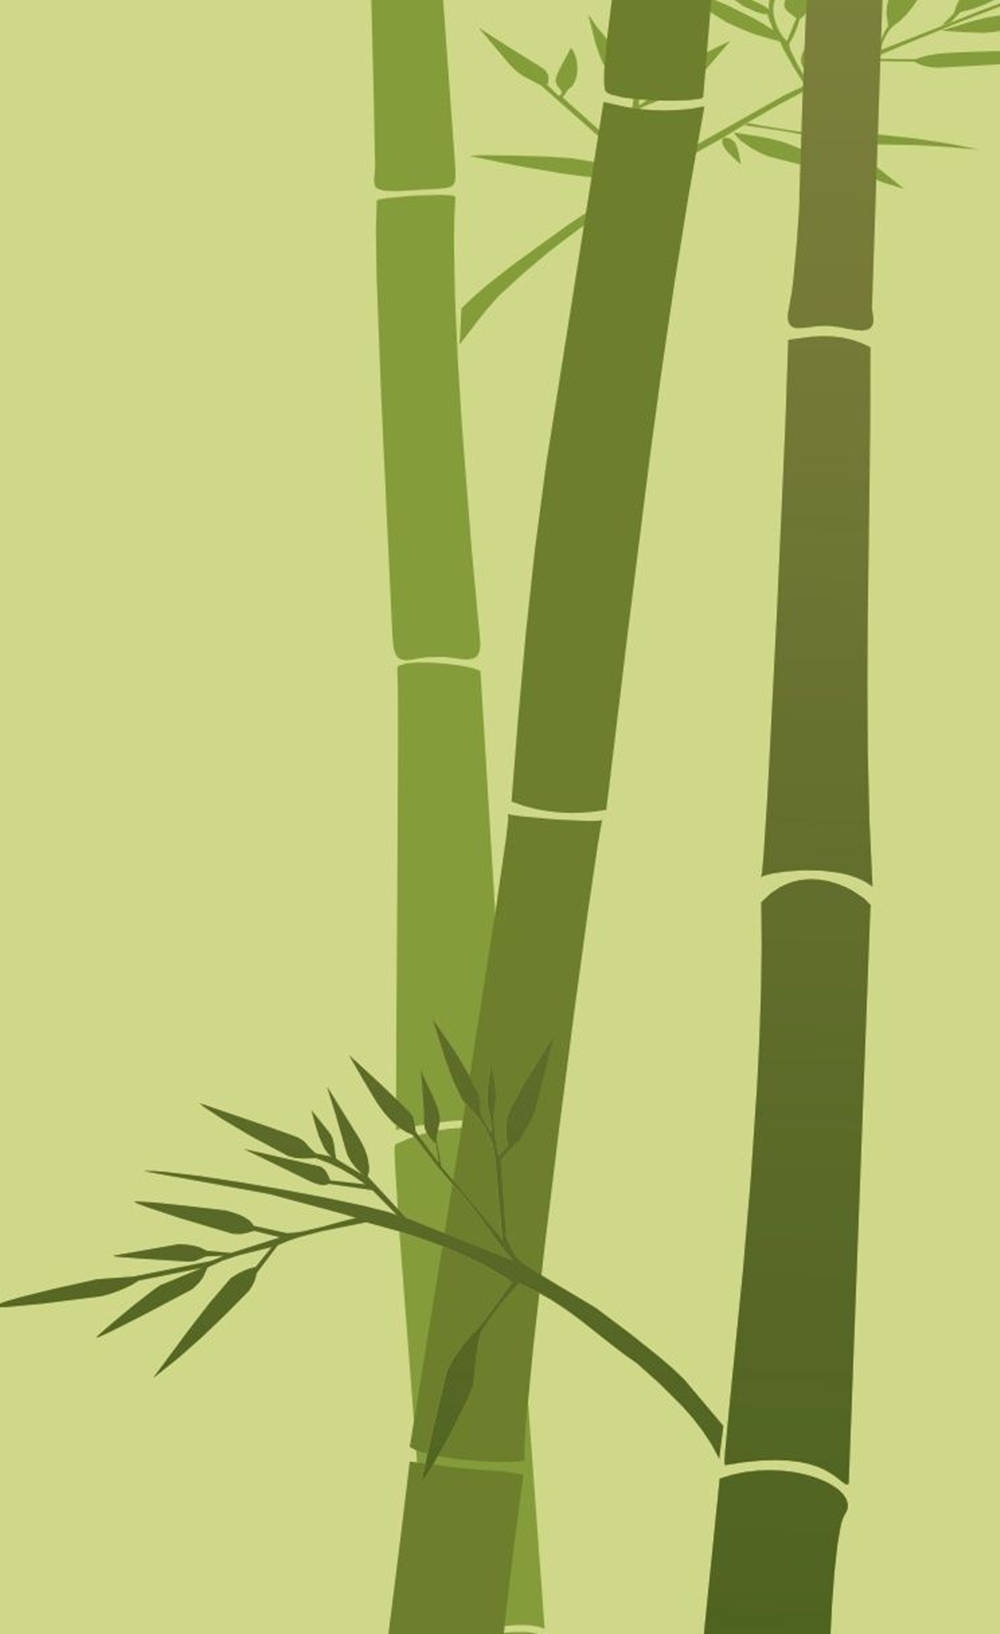 Elegant Minimalist Bamboo Art on iPhone Wallpaper